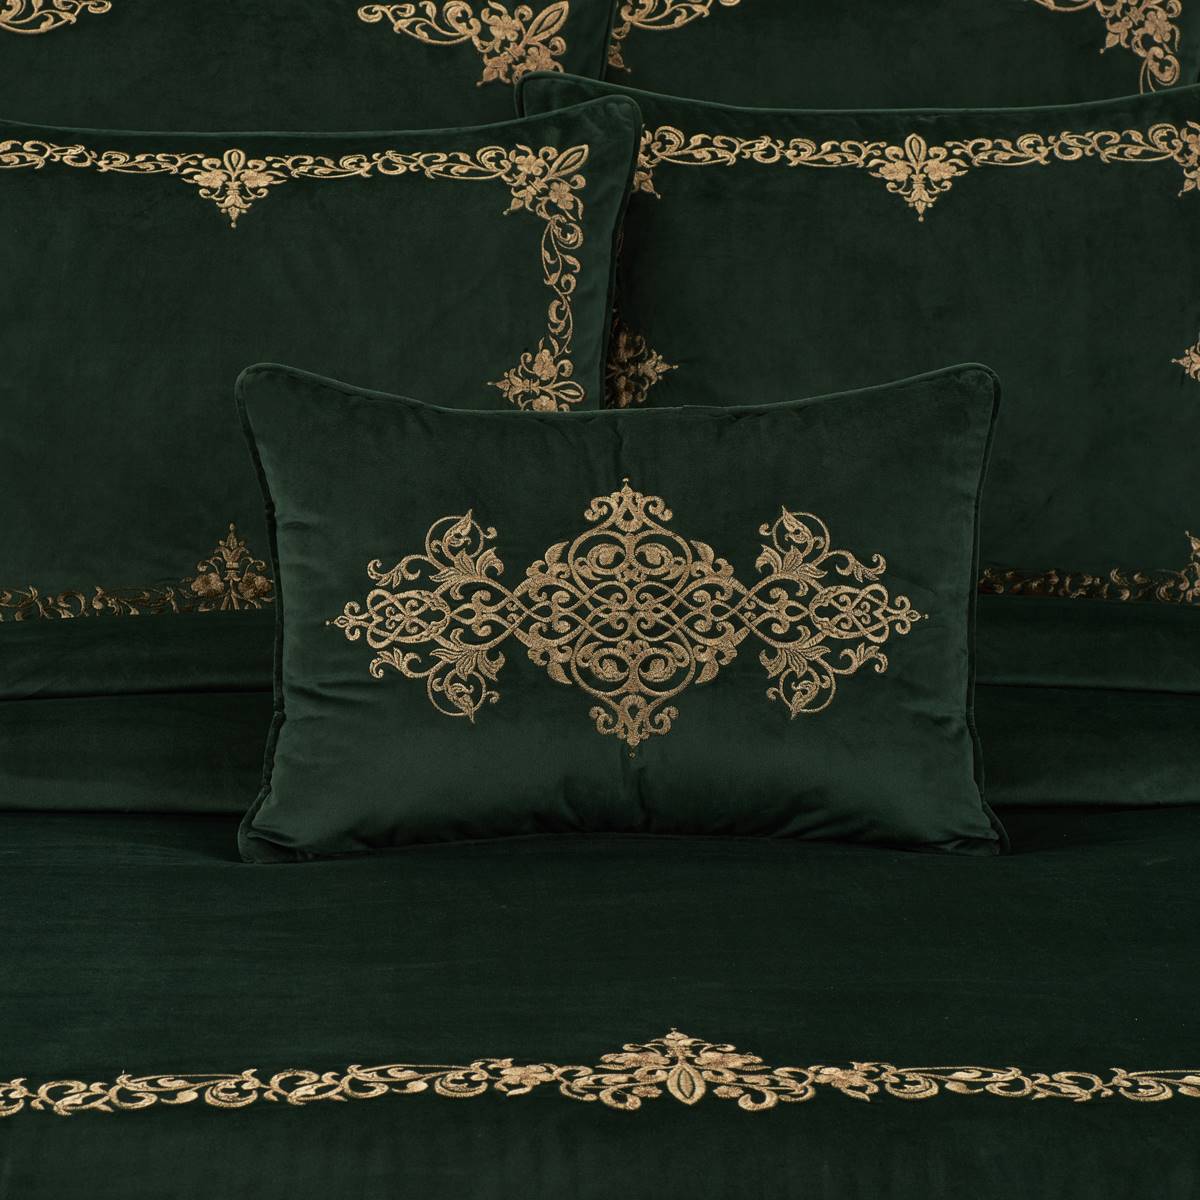 J. Queen New York Evergreen Boudoir Embellished Decorative Pillow